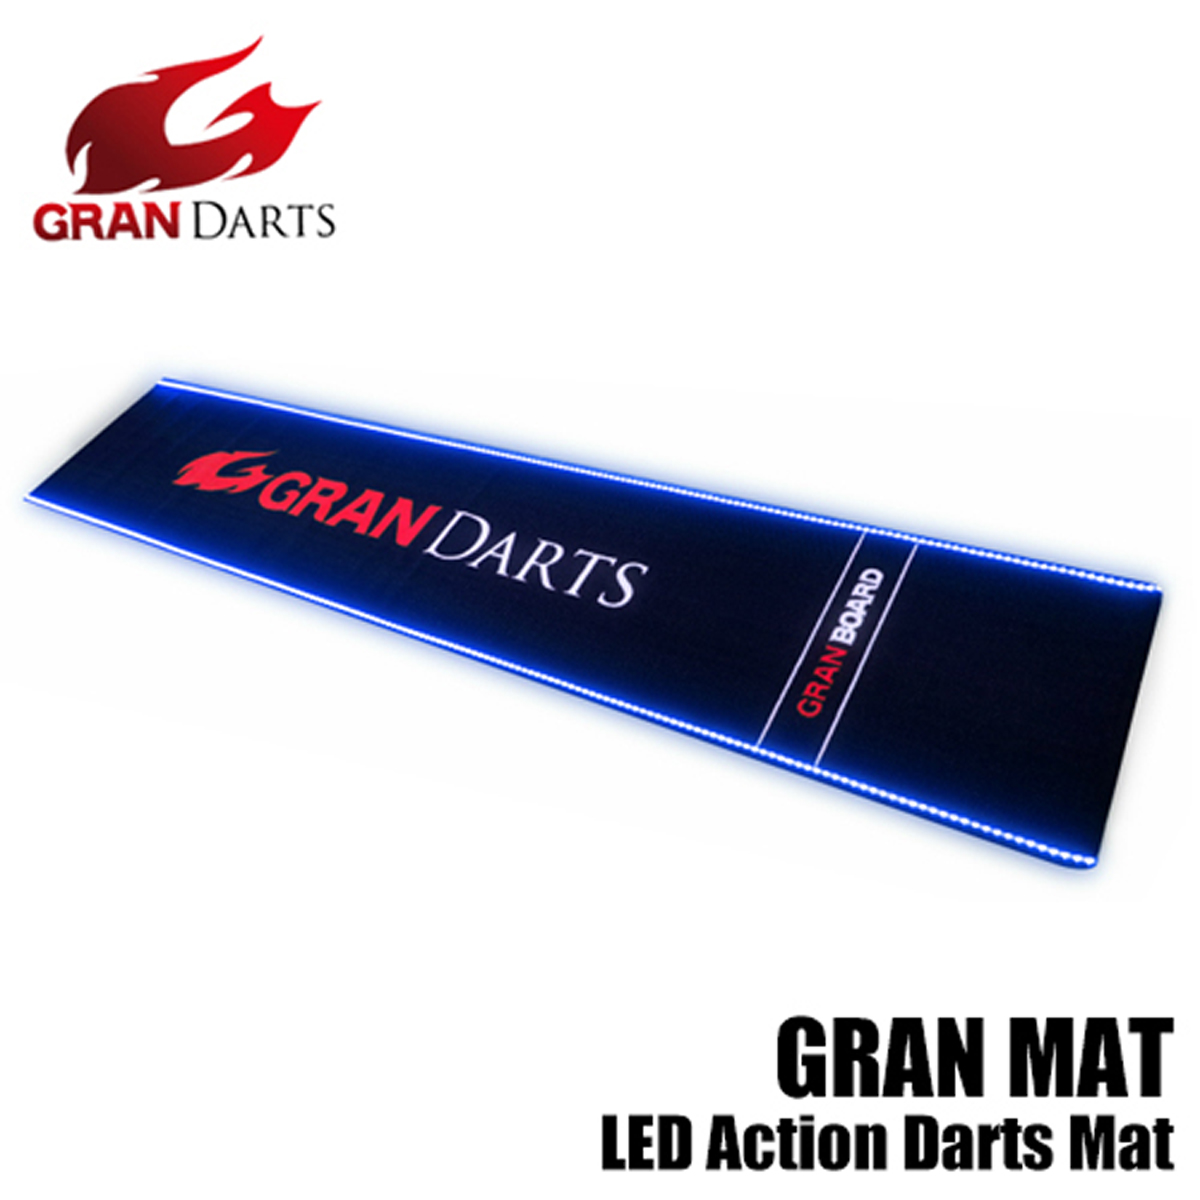 GRAN DARTS MAT 新款LED地毯三代电子靶联网联动飞镖垫飞镖靶道发